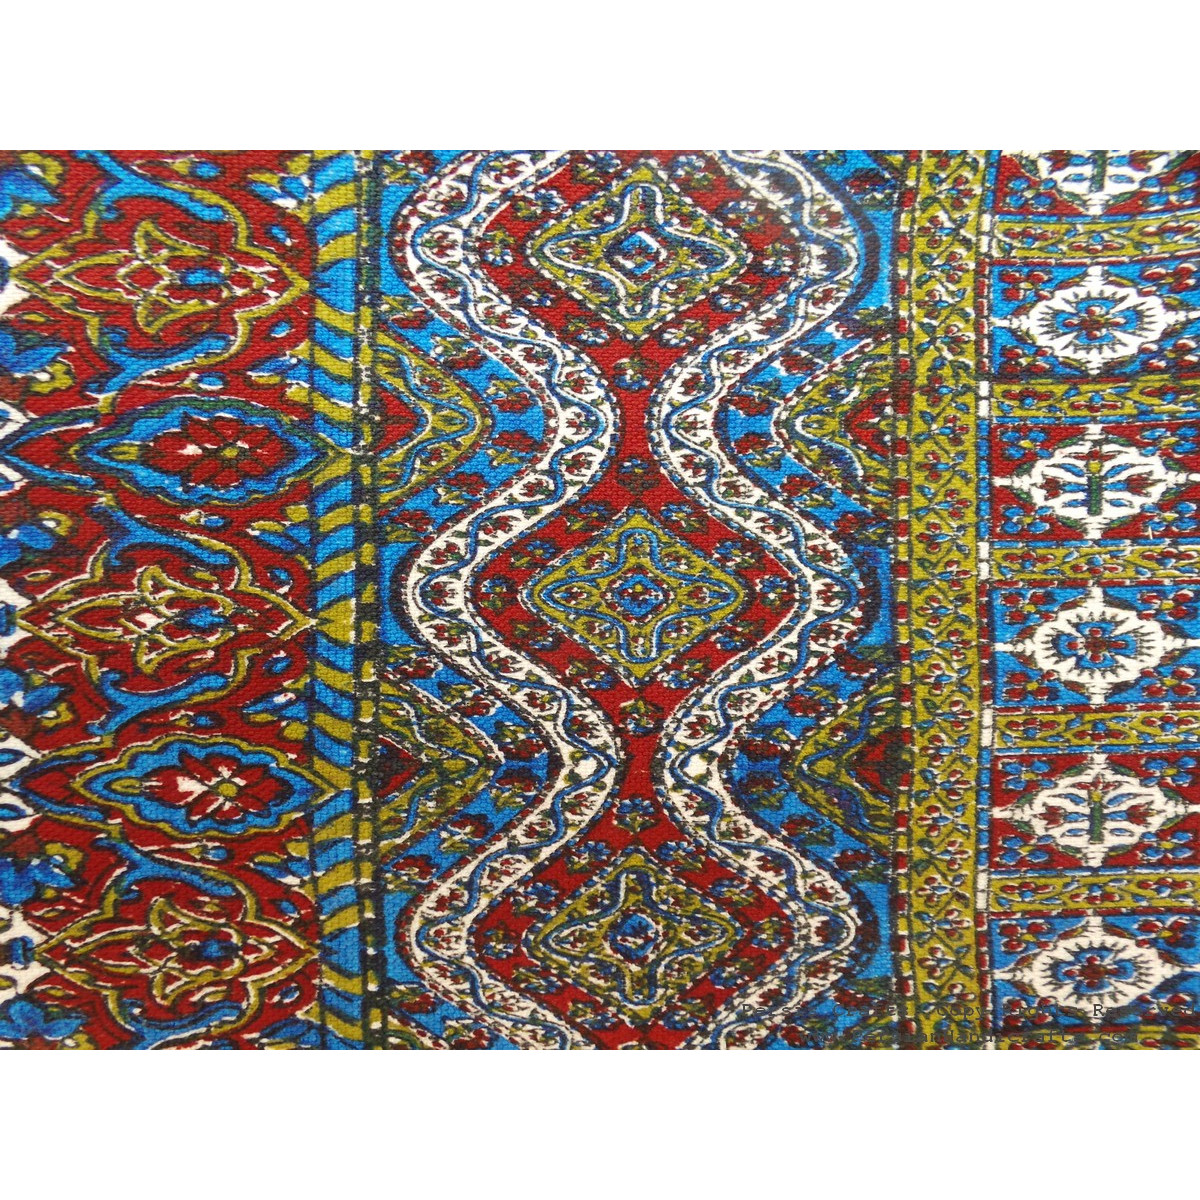 Persian Tapestry (Ghalamkar) Tablecloth - HGH3603-Persian Handicrafts